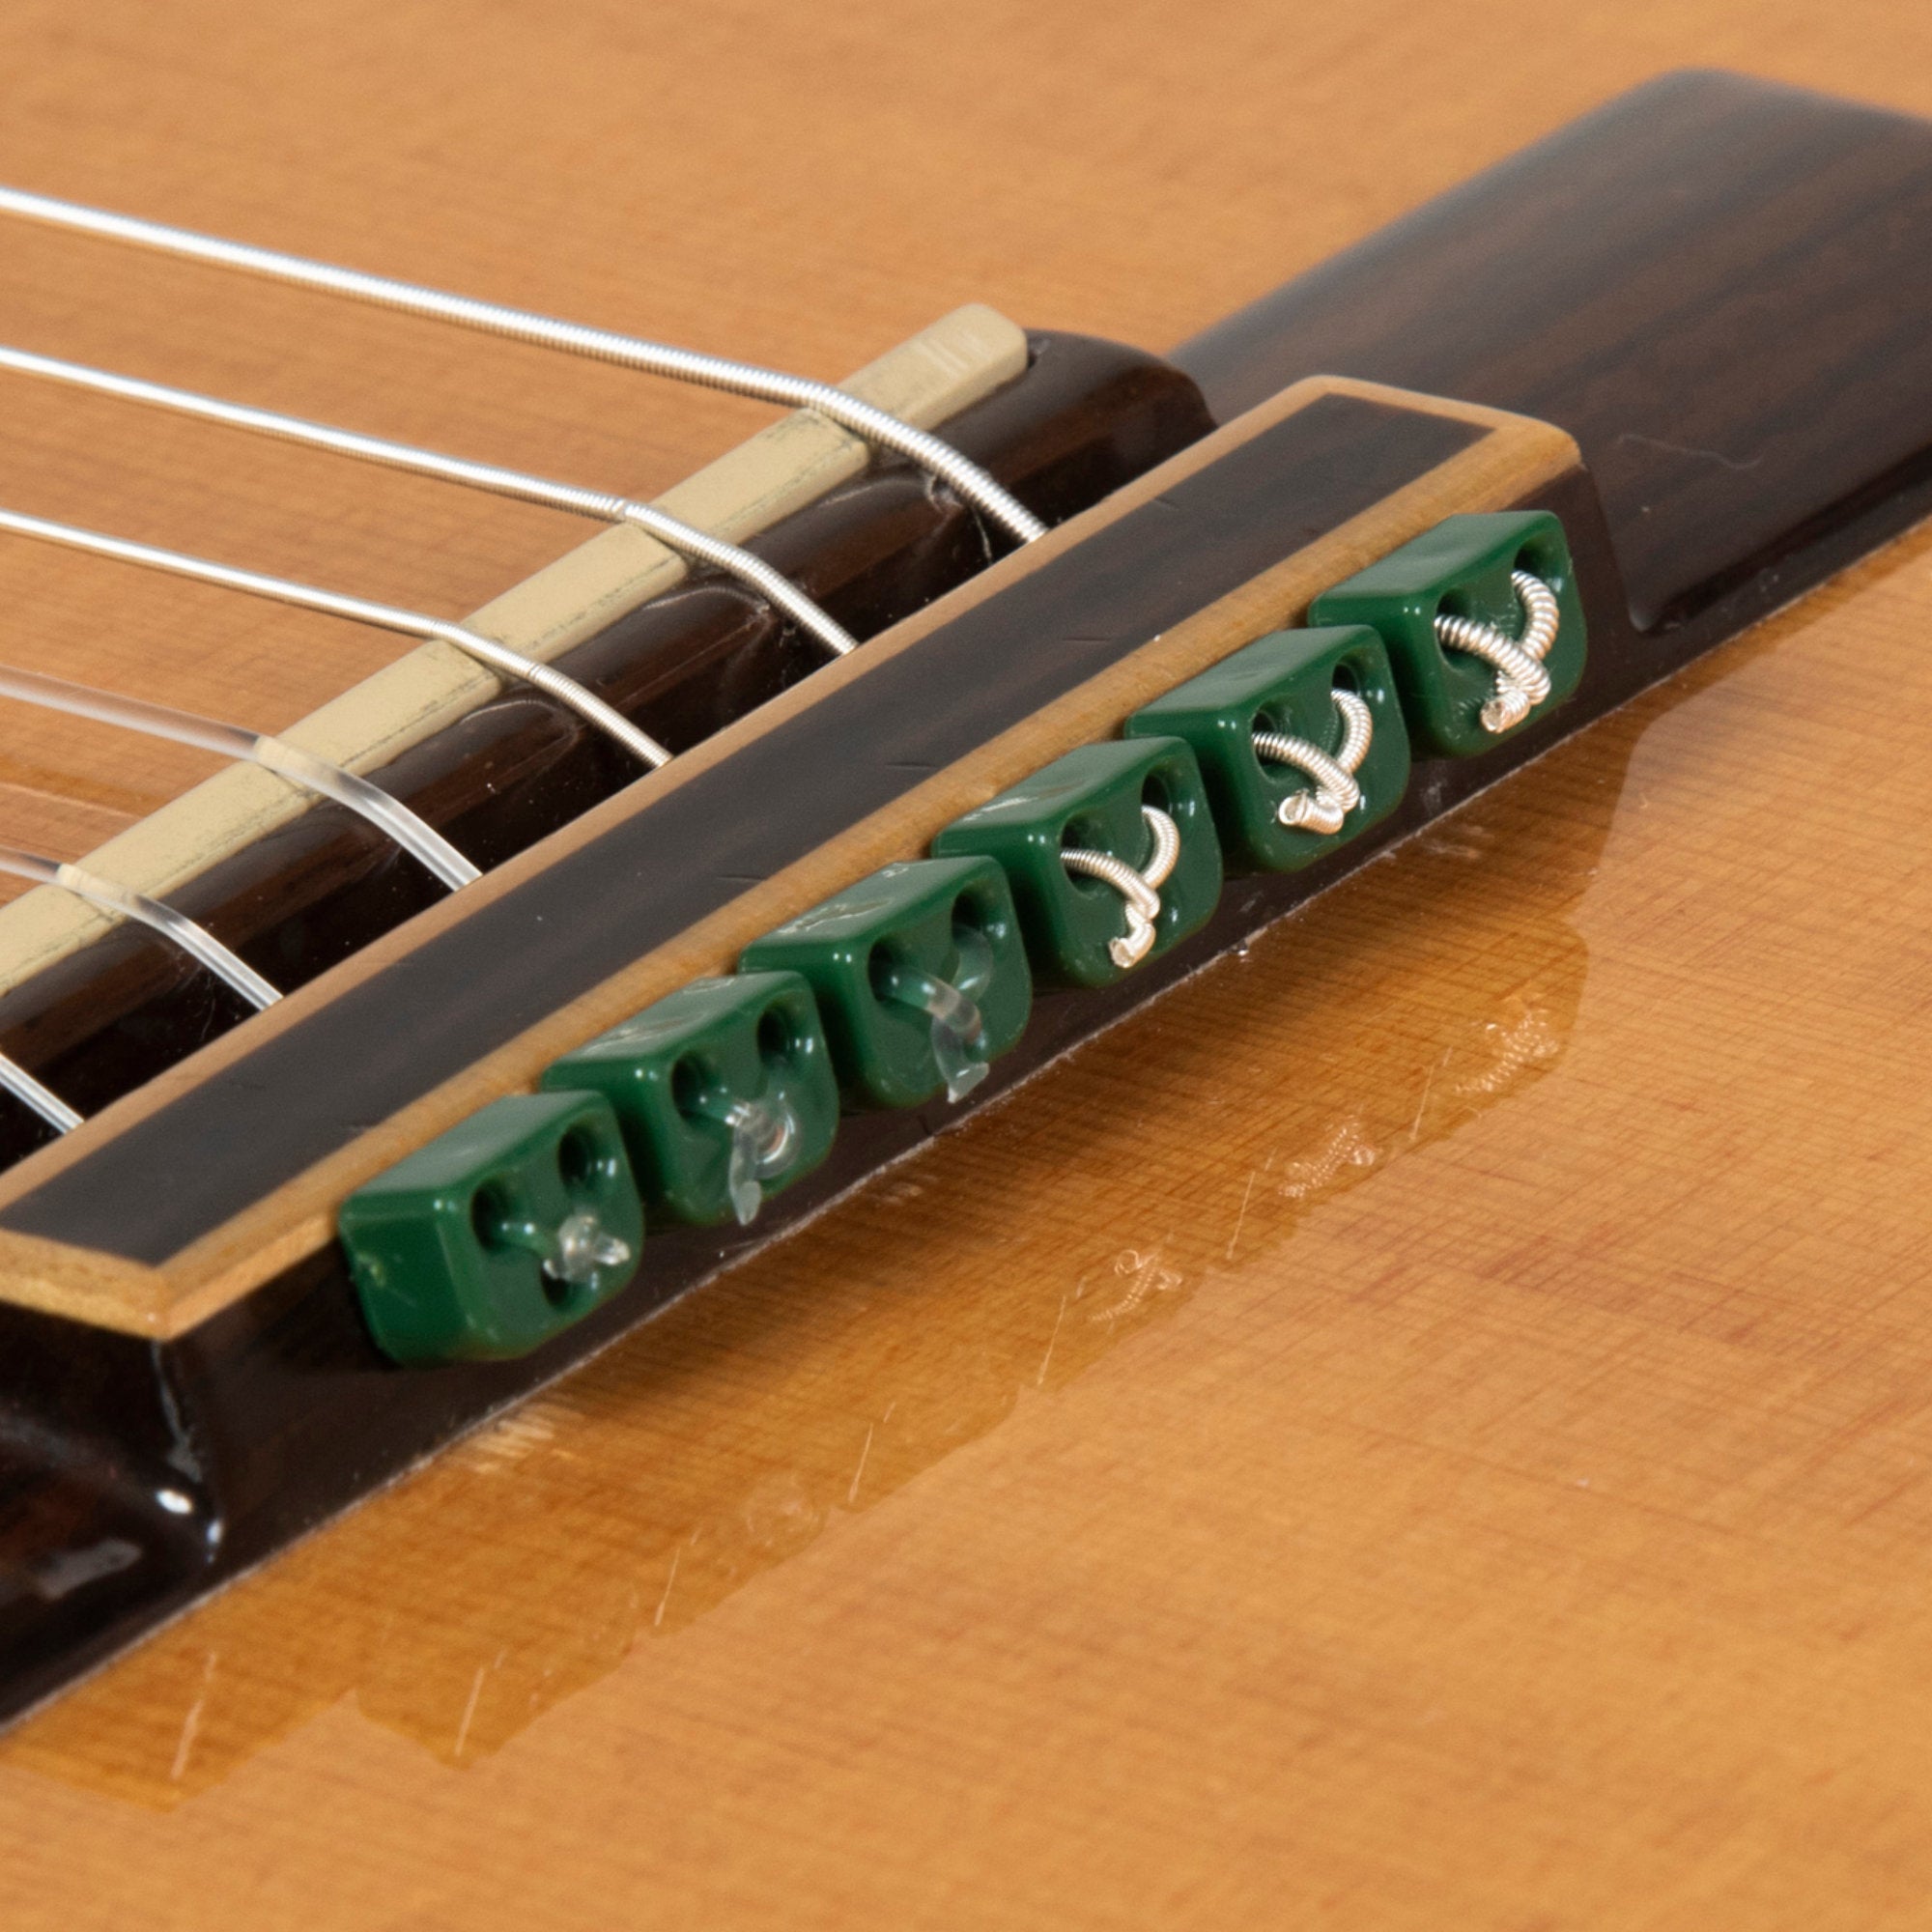 Grüne Alba Guitar Beads für Klassische Gitarren, Flamenco Gitarren- und Akustik Gitarren mit Nylonsaiten